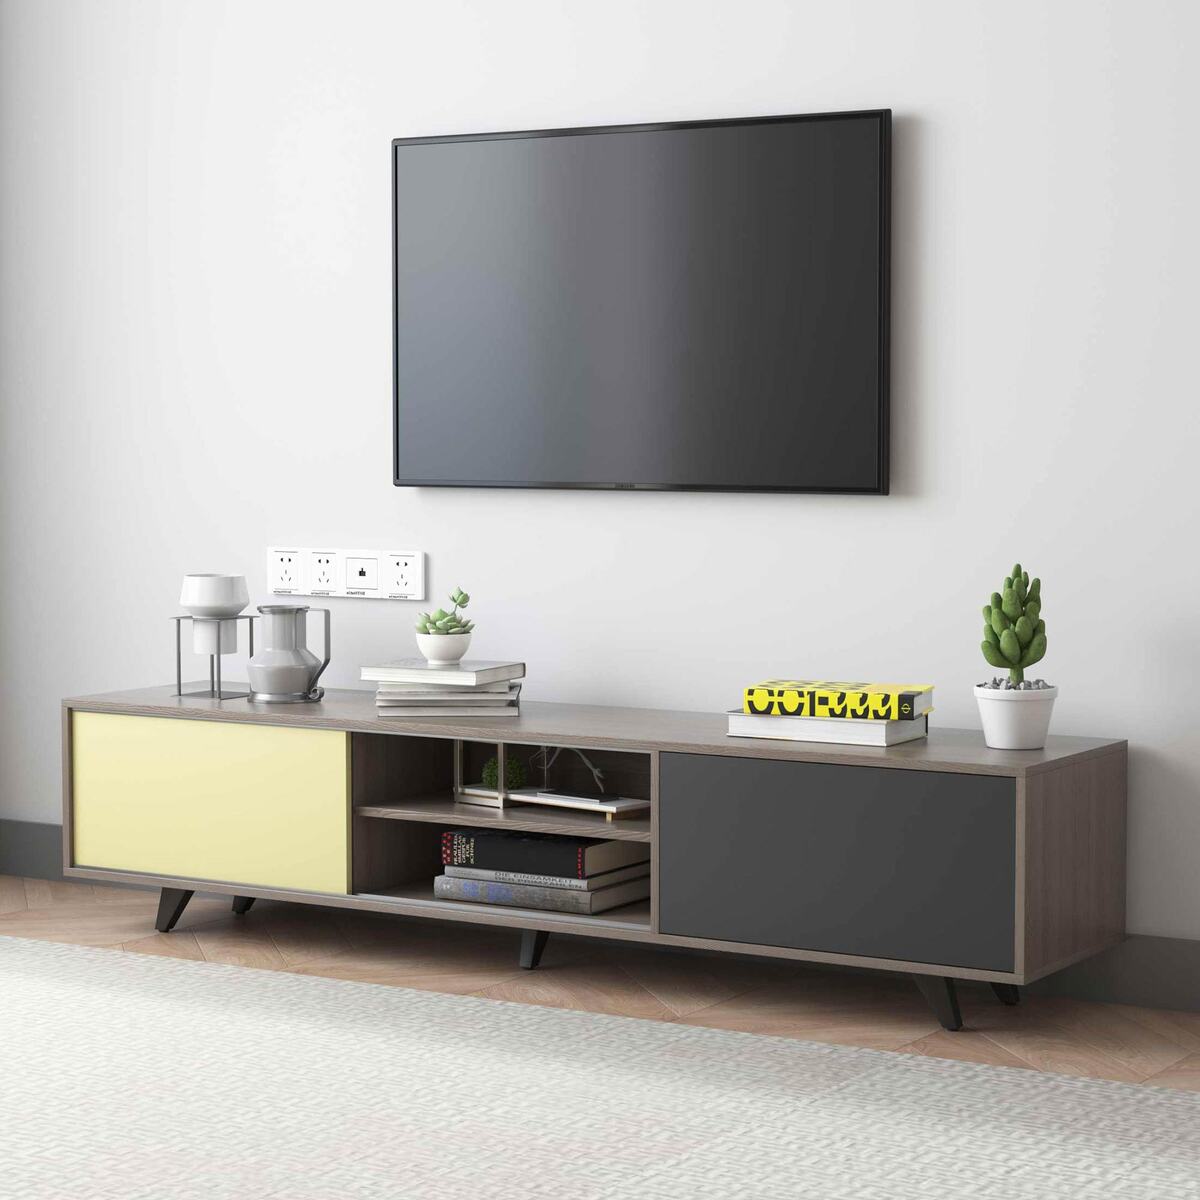 Maple Leaf Tv Stand 160cm 8D002.Size:42x40x160 Cms(HxWxL)